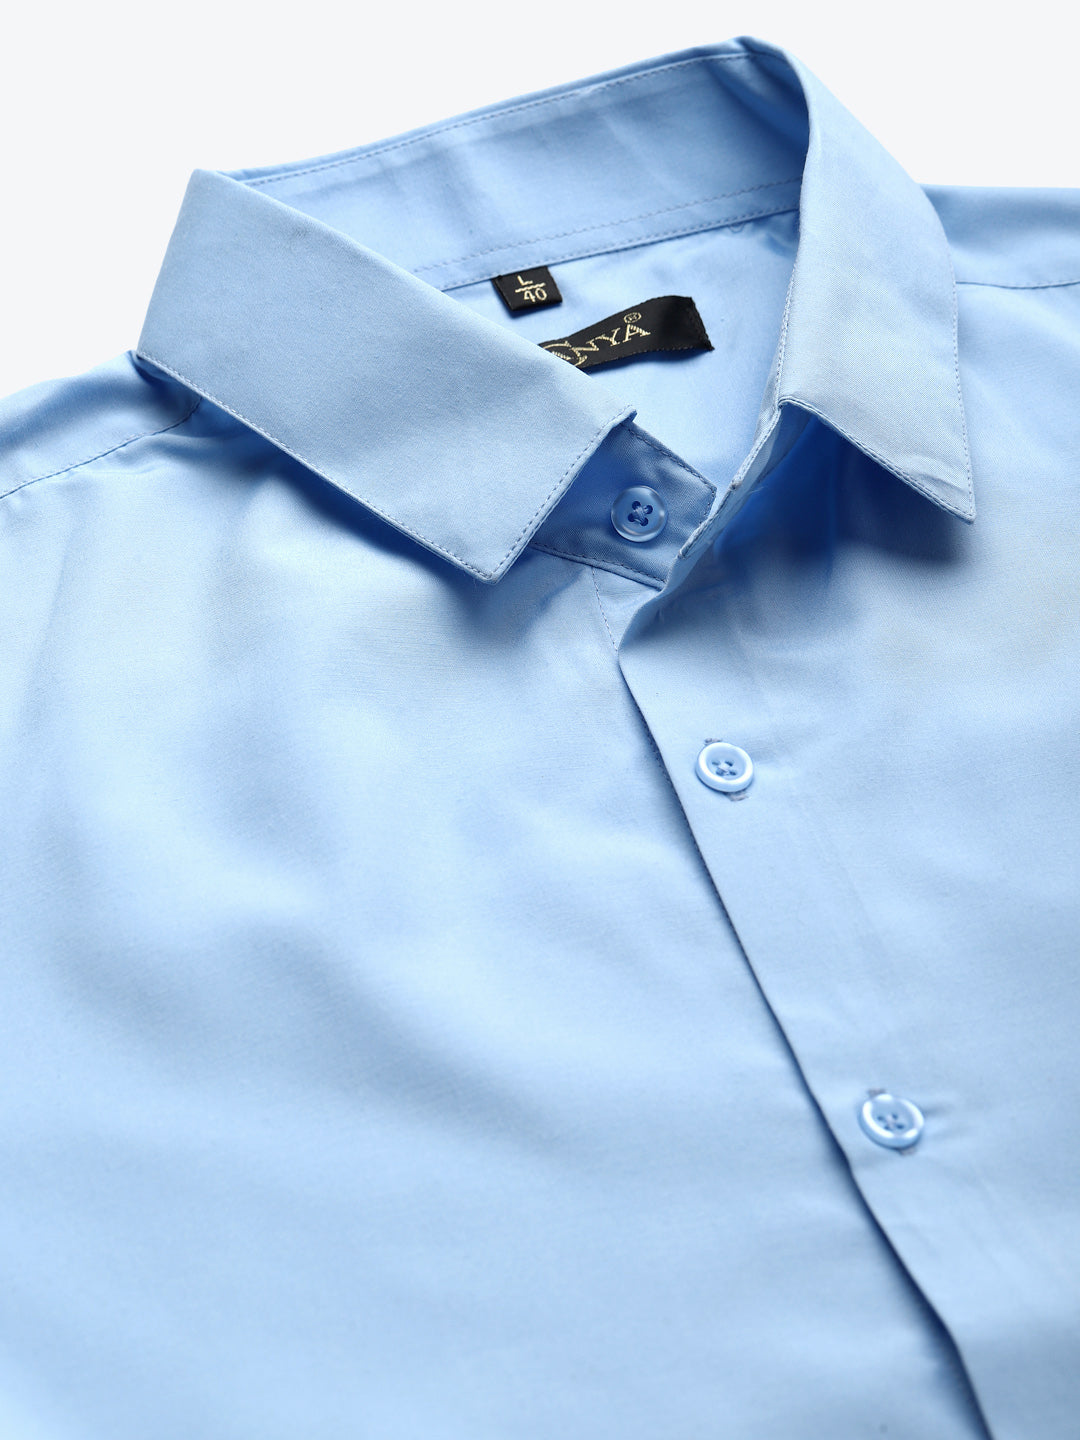 Men's Cotton Sky blue Classic Formal Shirt - Sojanya